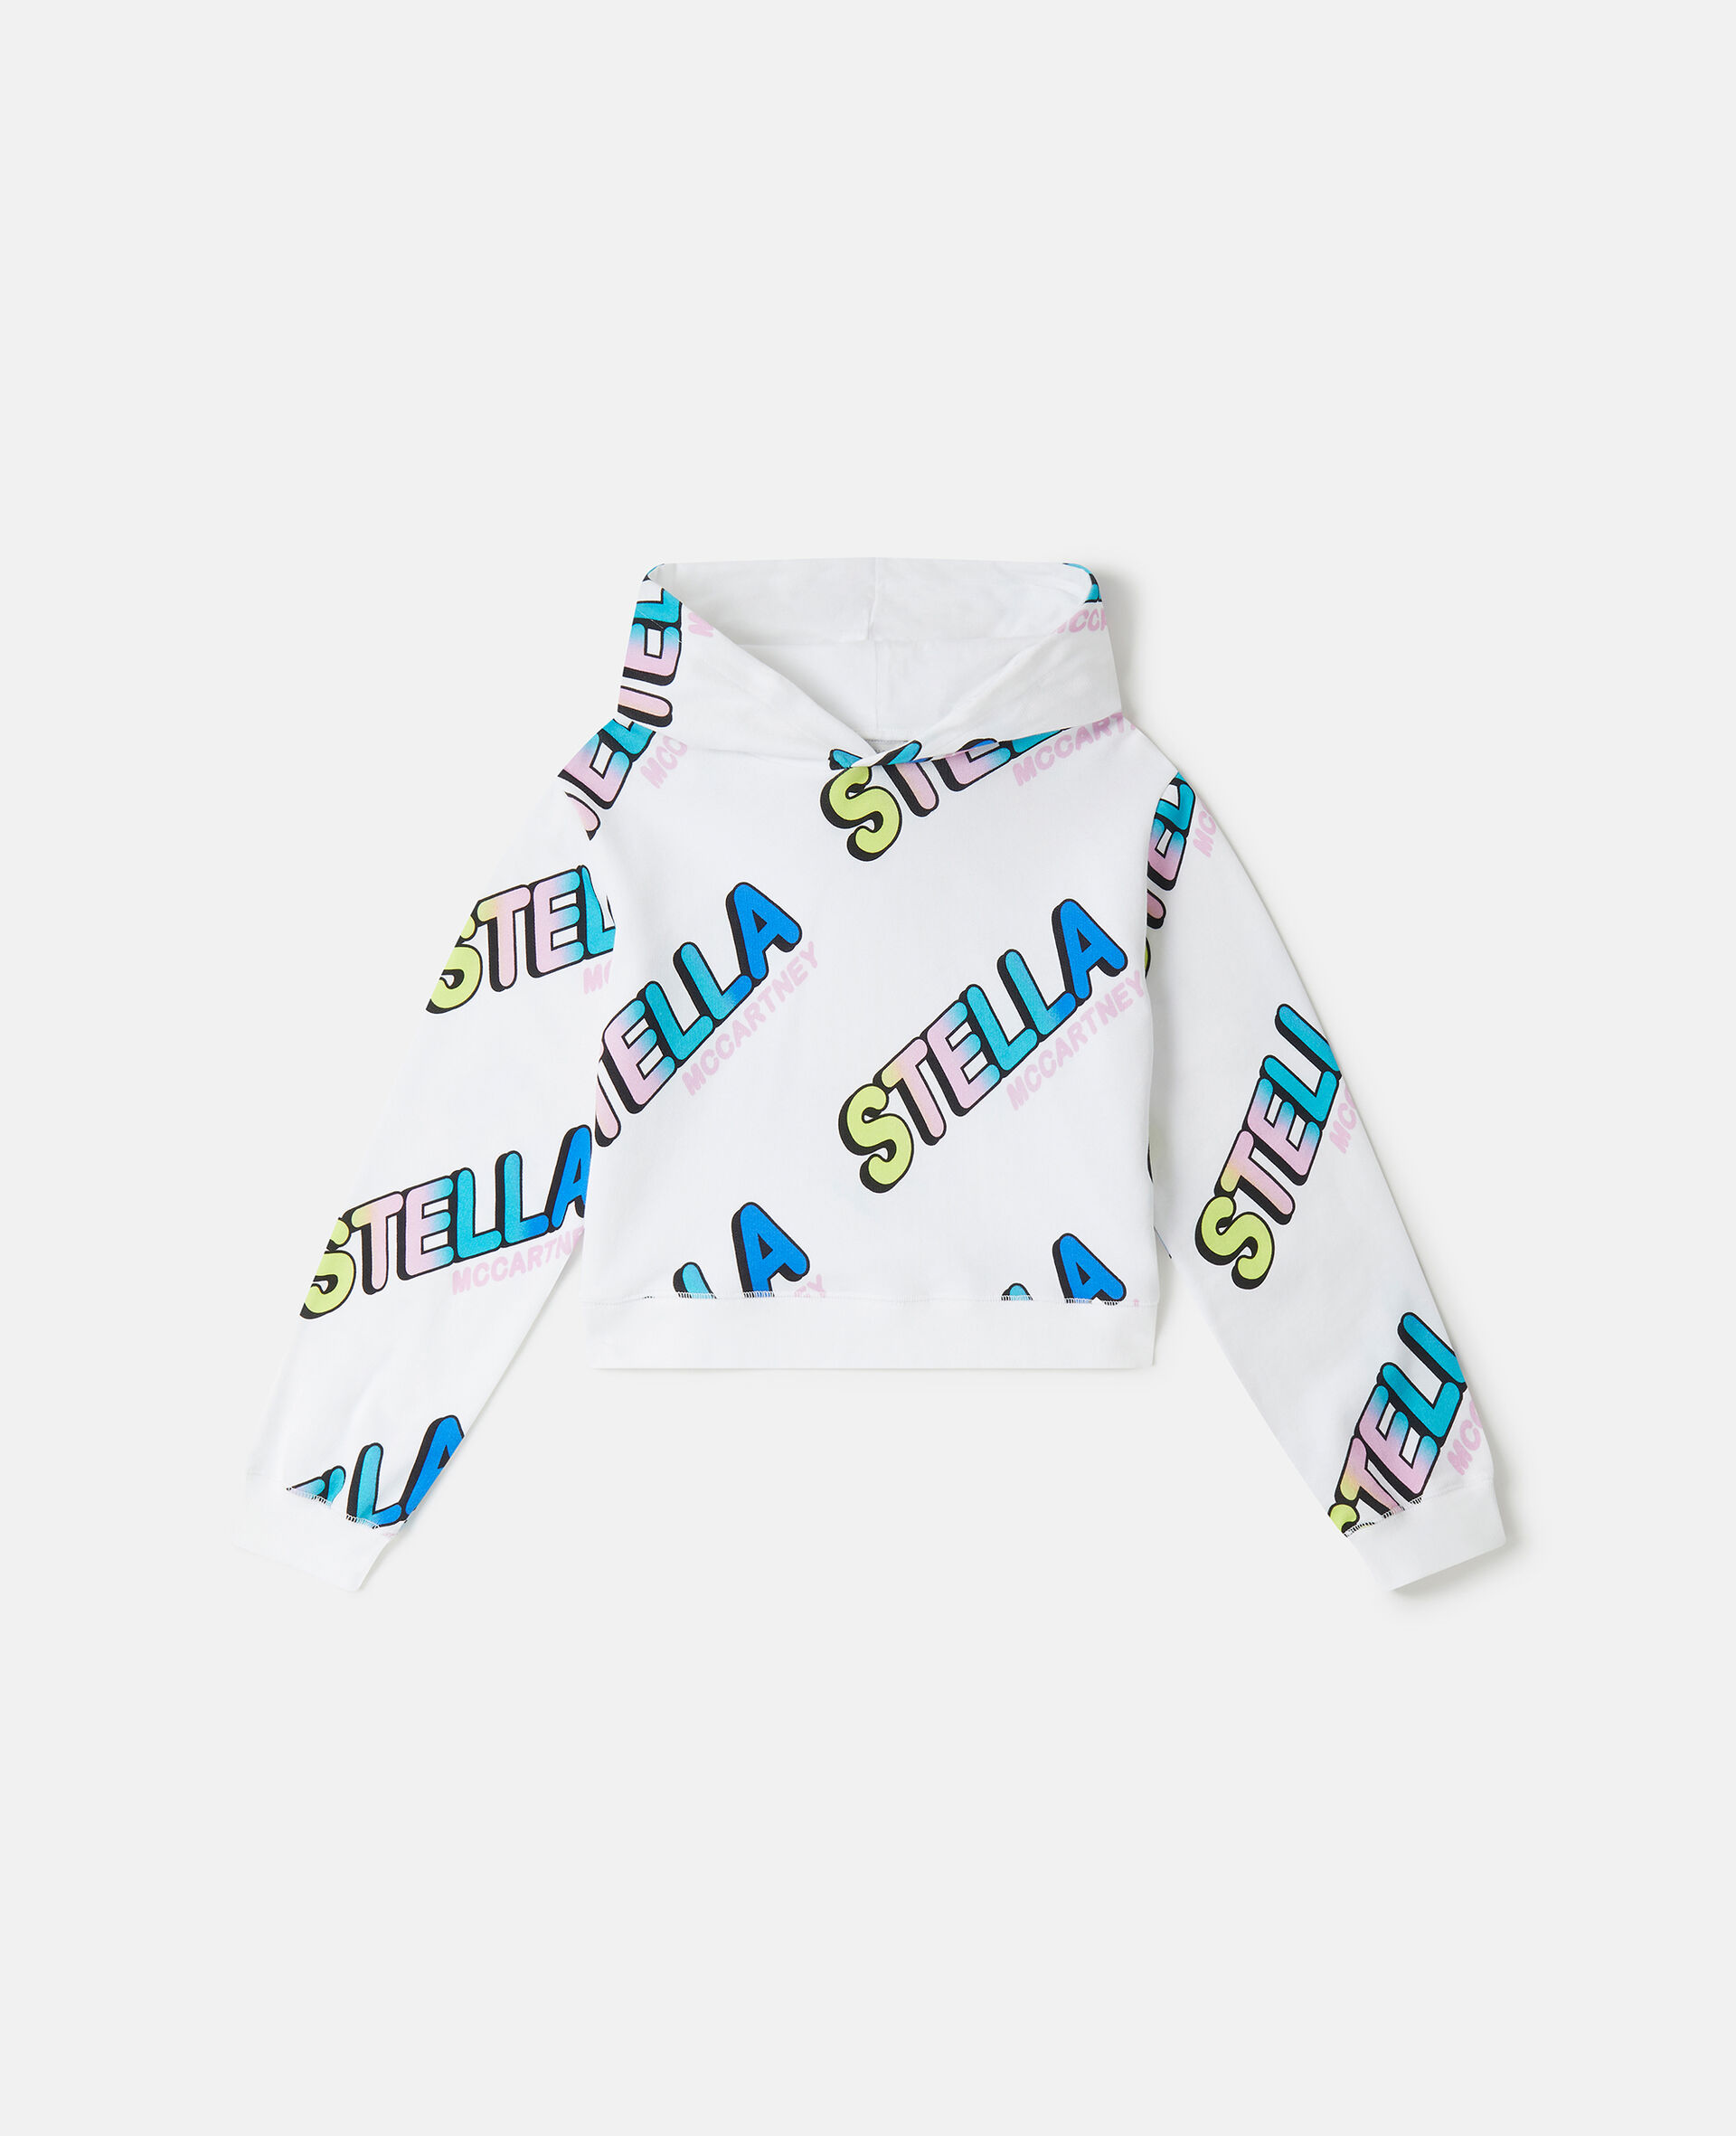 Sweat-shirt à capuche court STELLA Logo-Fantaisie-medium